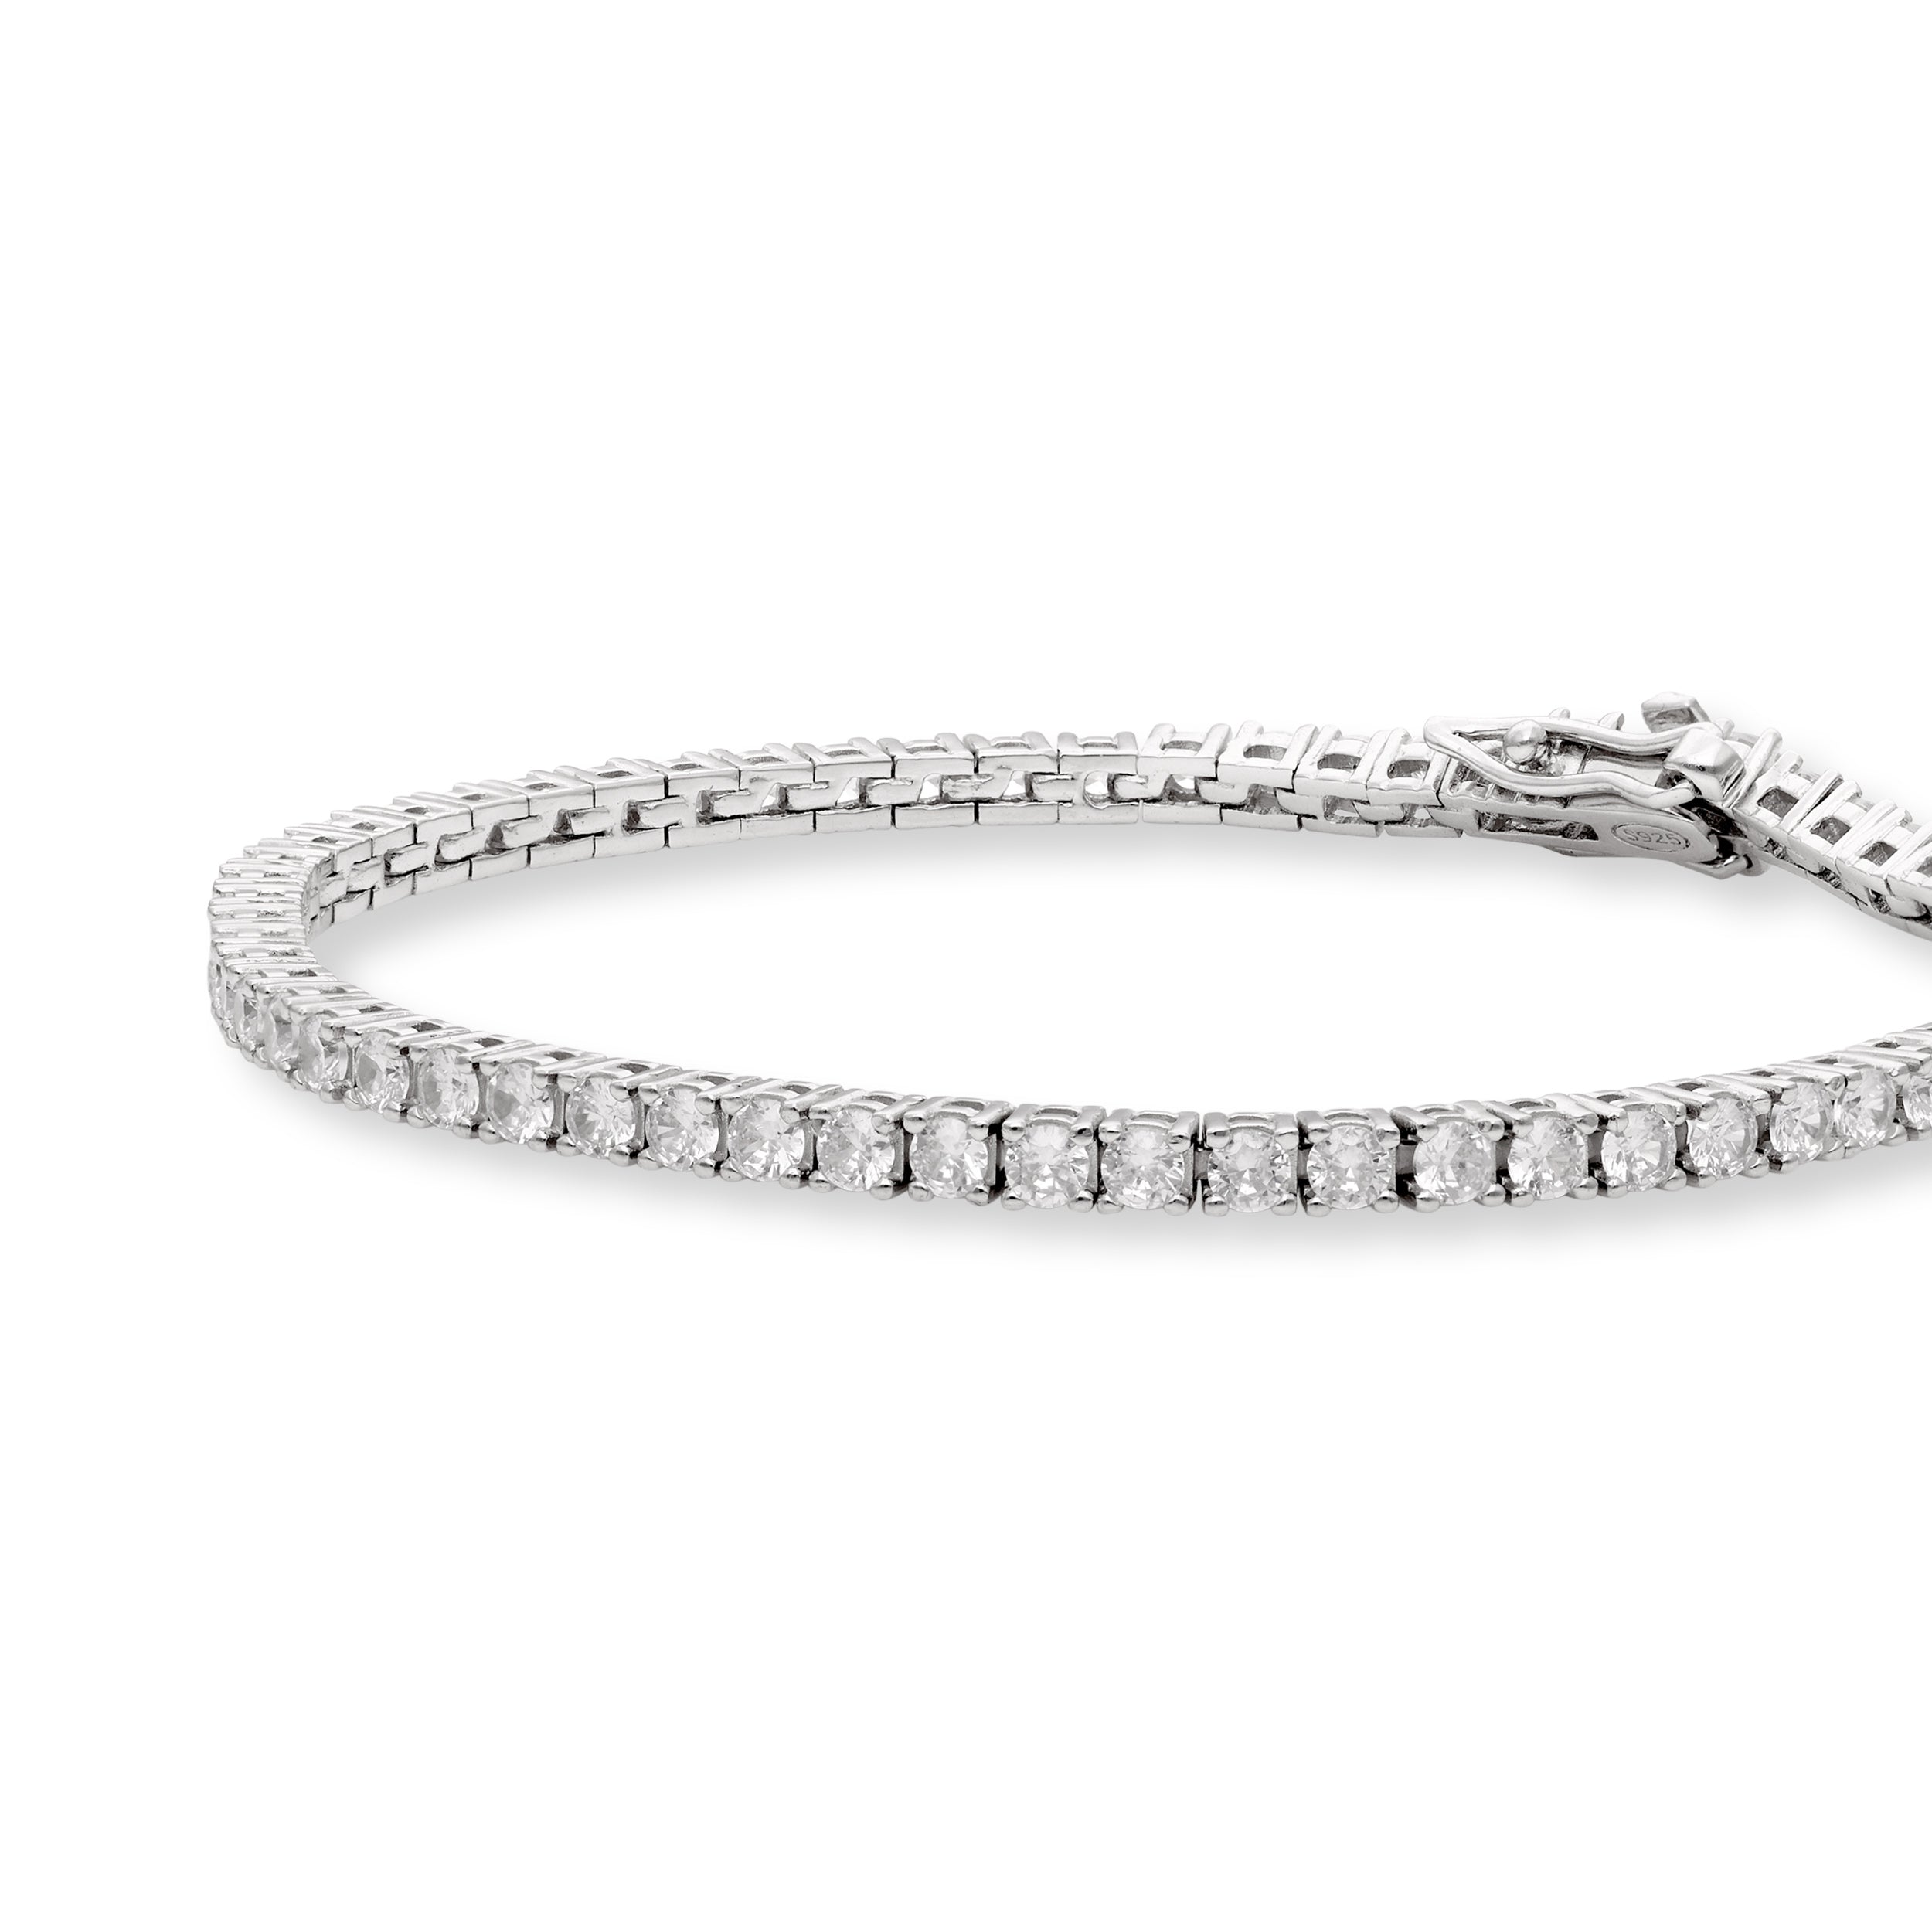 Designer Bracelet in Sterling Silver | SKU: 0018701852, 0018701944